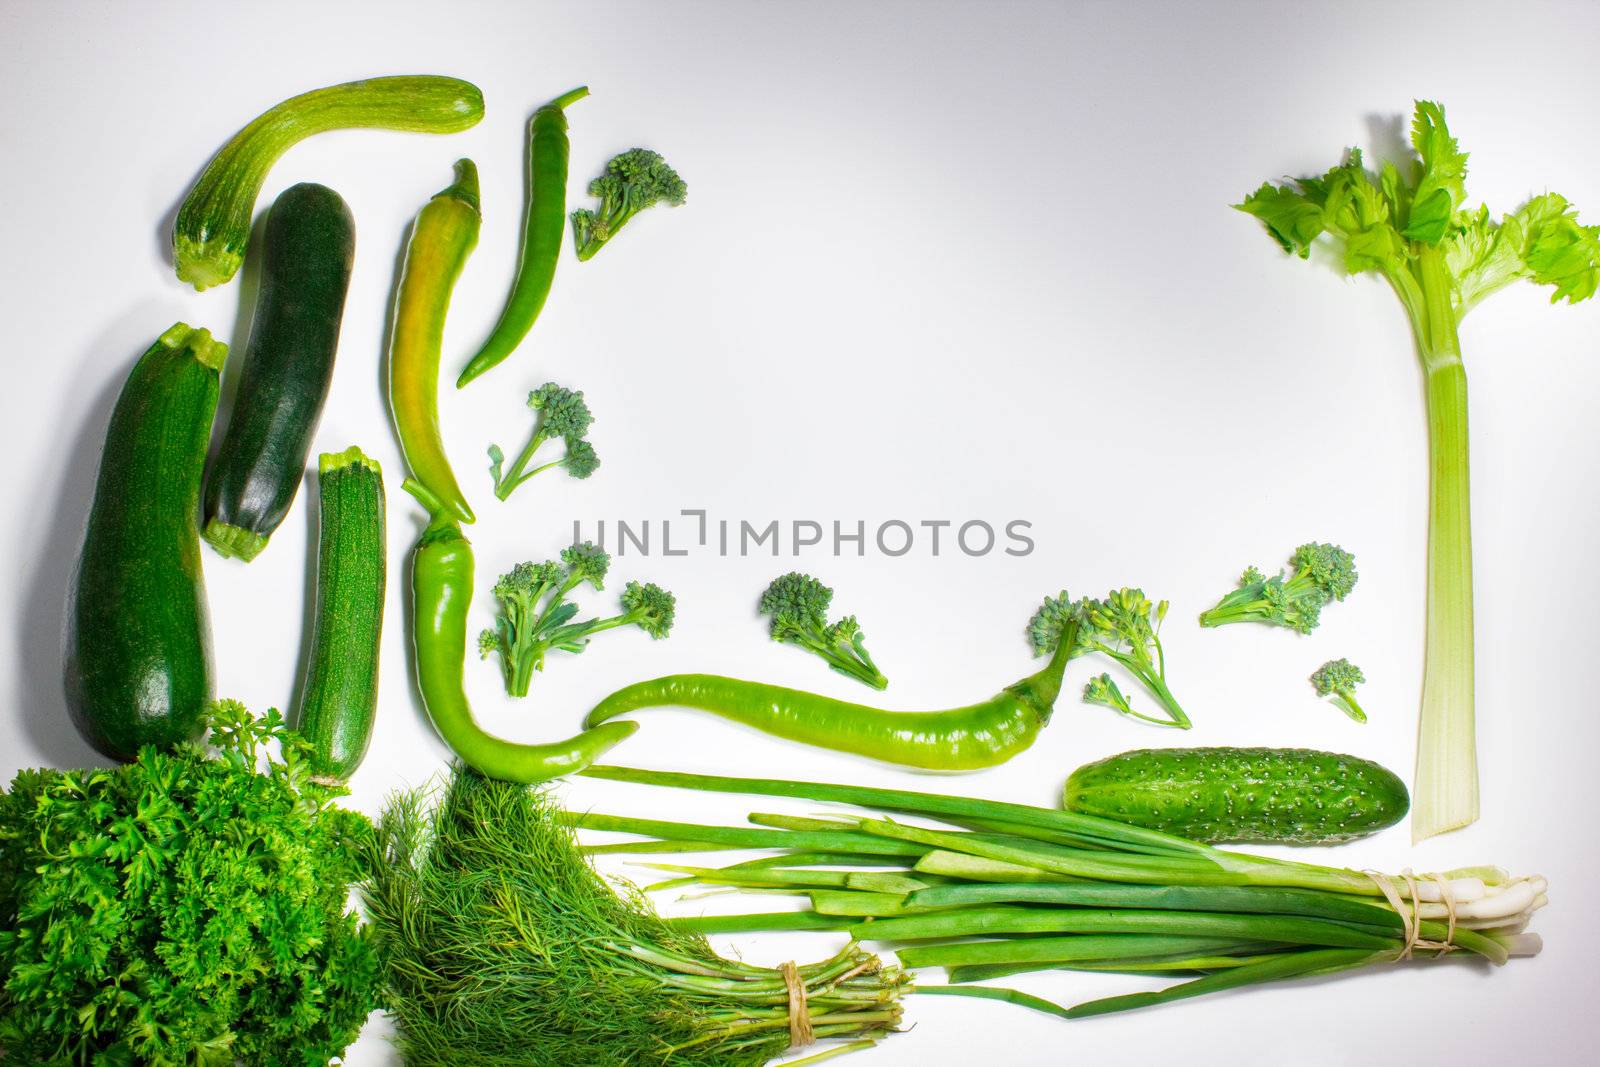 Fresh green vegetables isolated on white